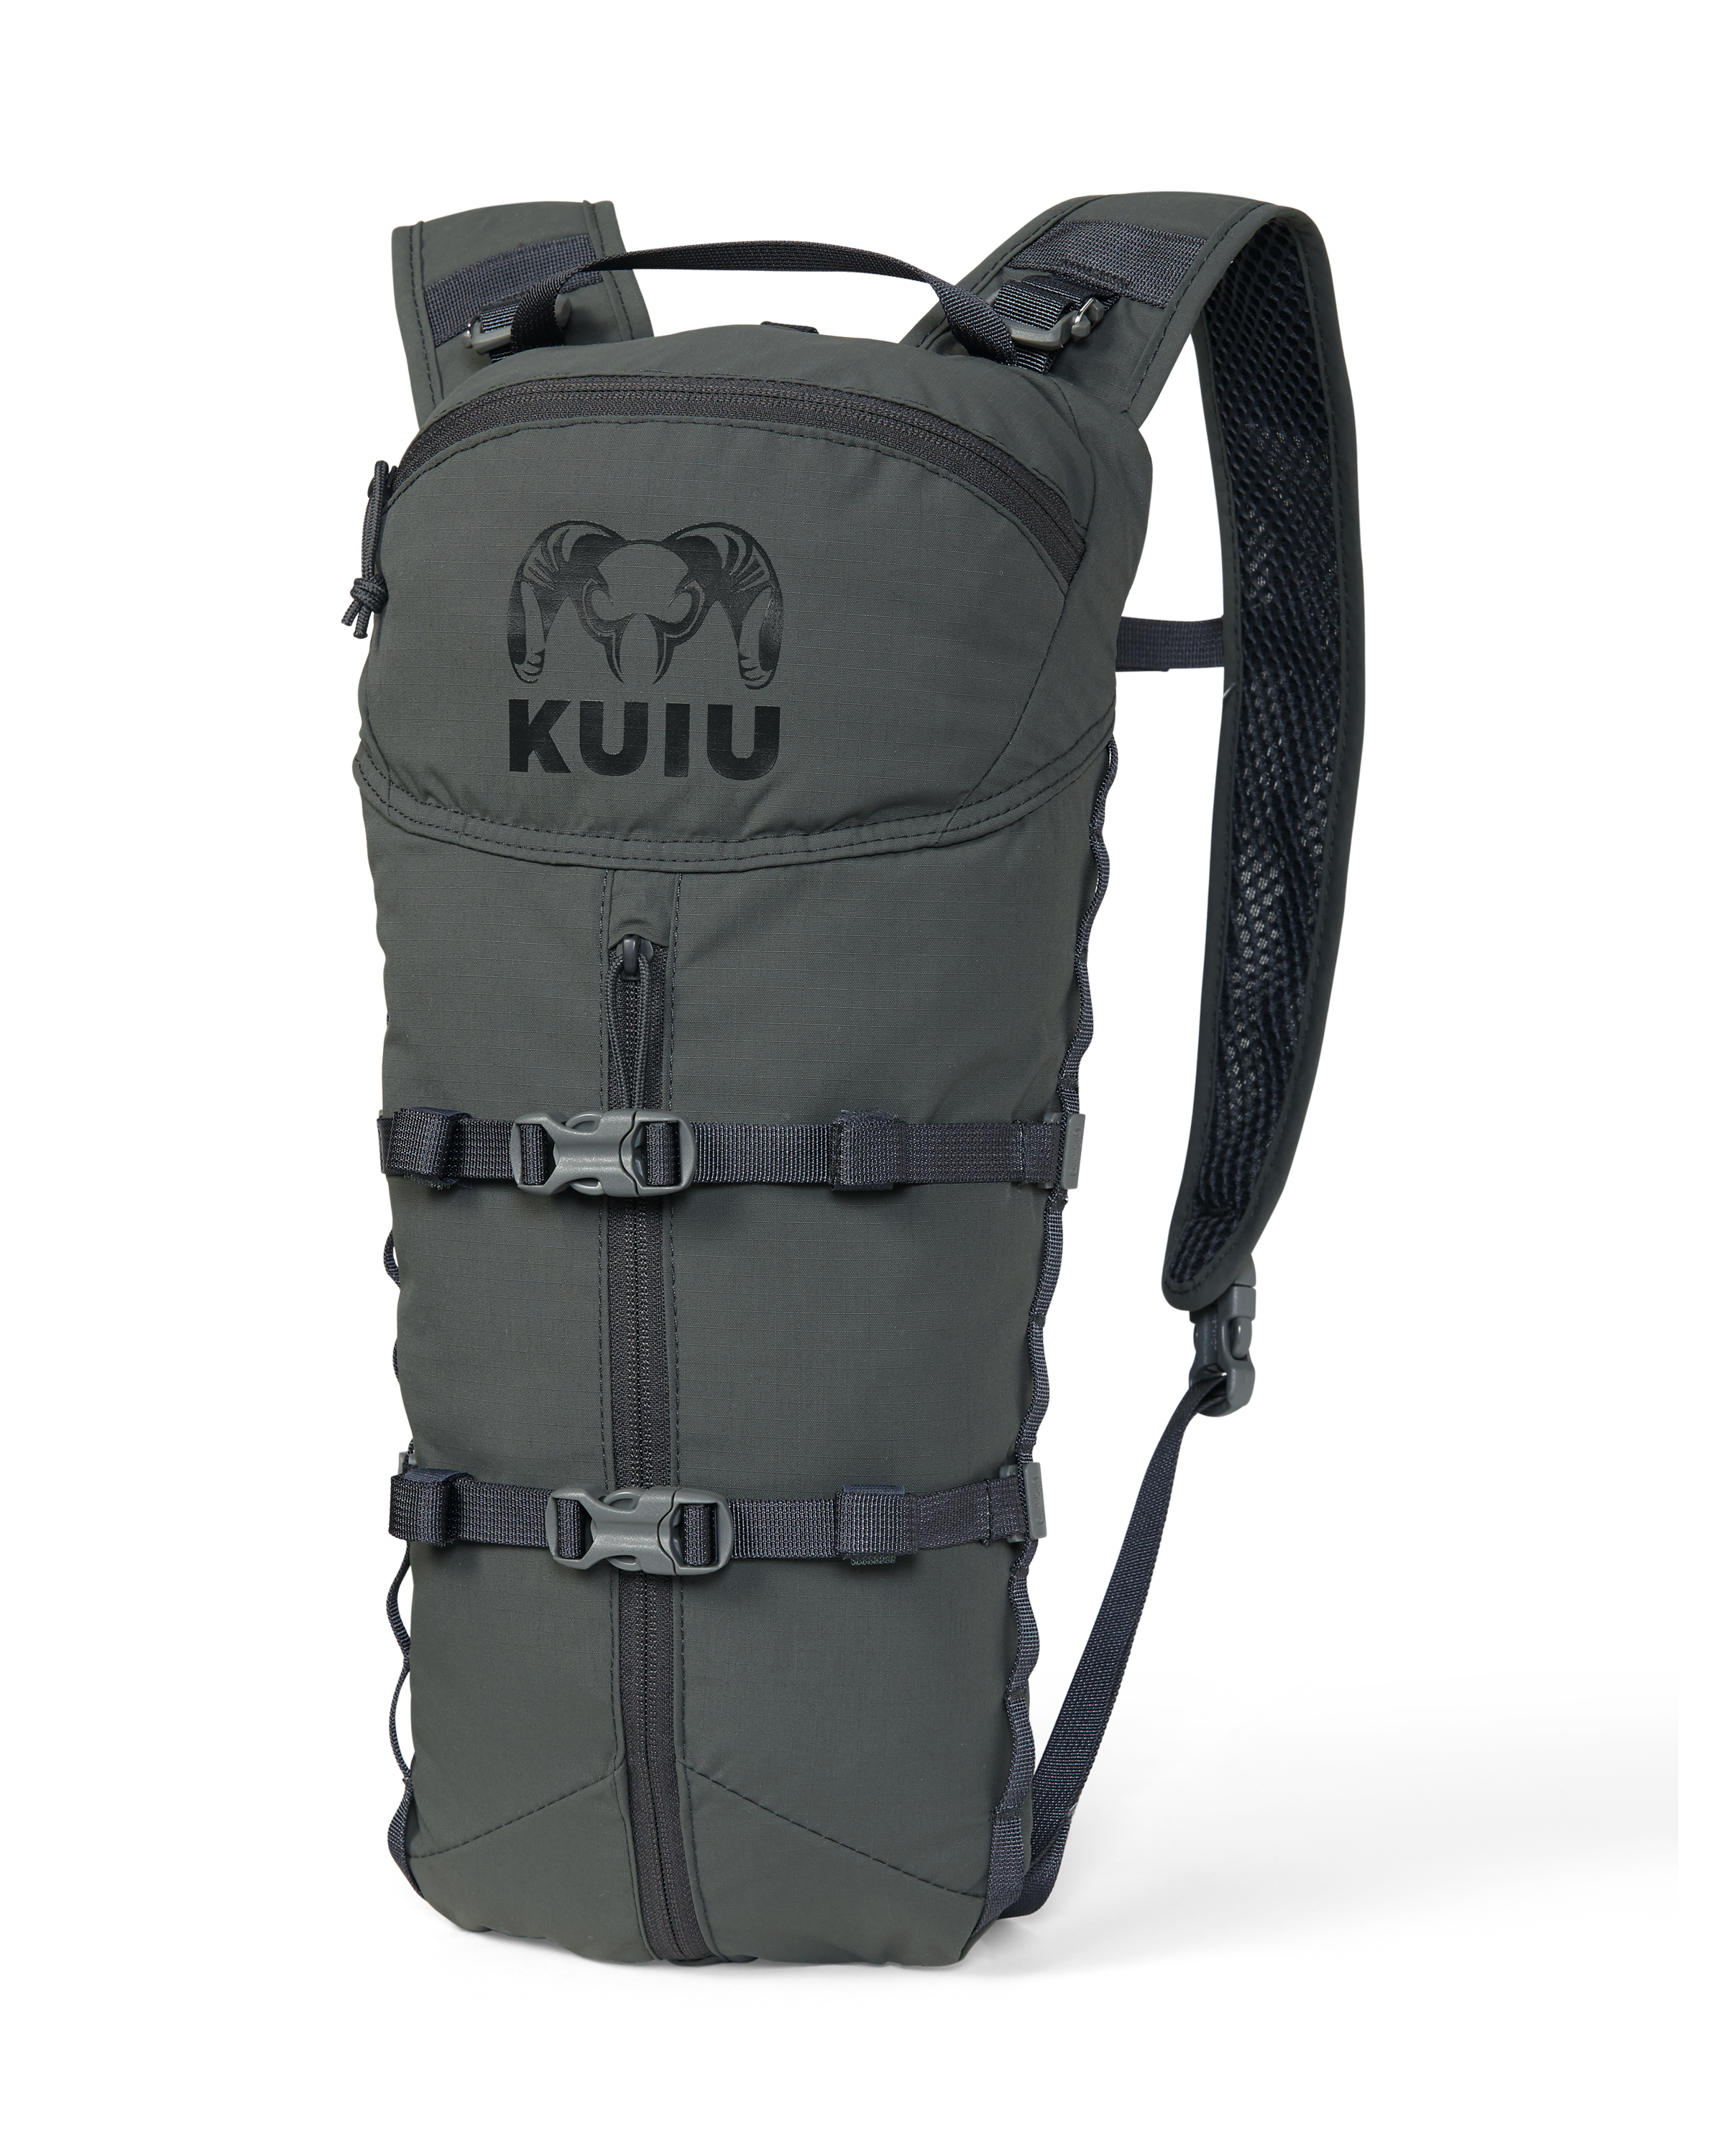 KUIU Stalker 500 Day Bag Pack PRO in Gunmetal Hunting Pack